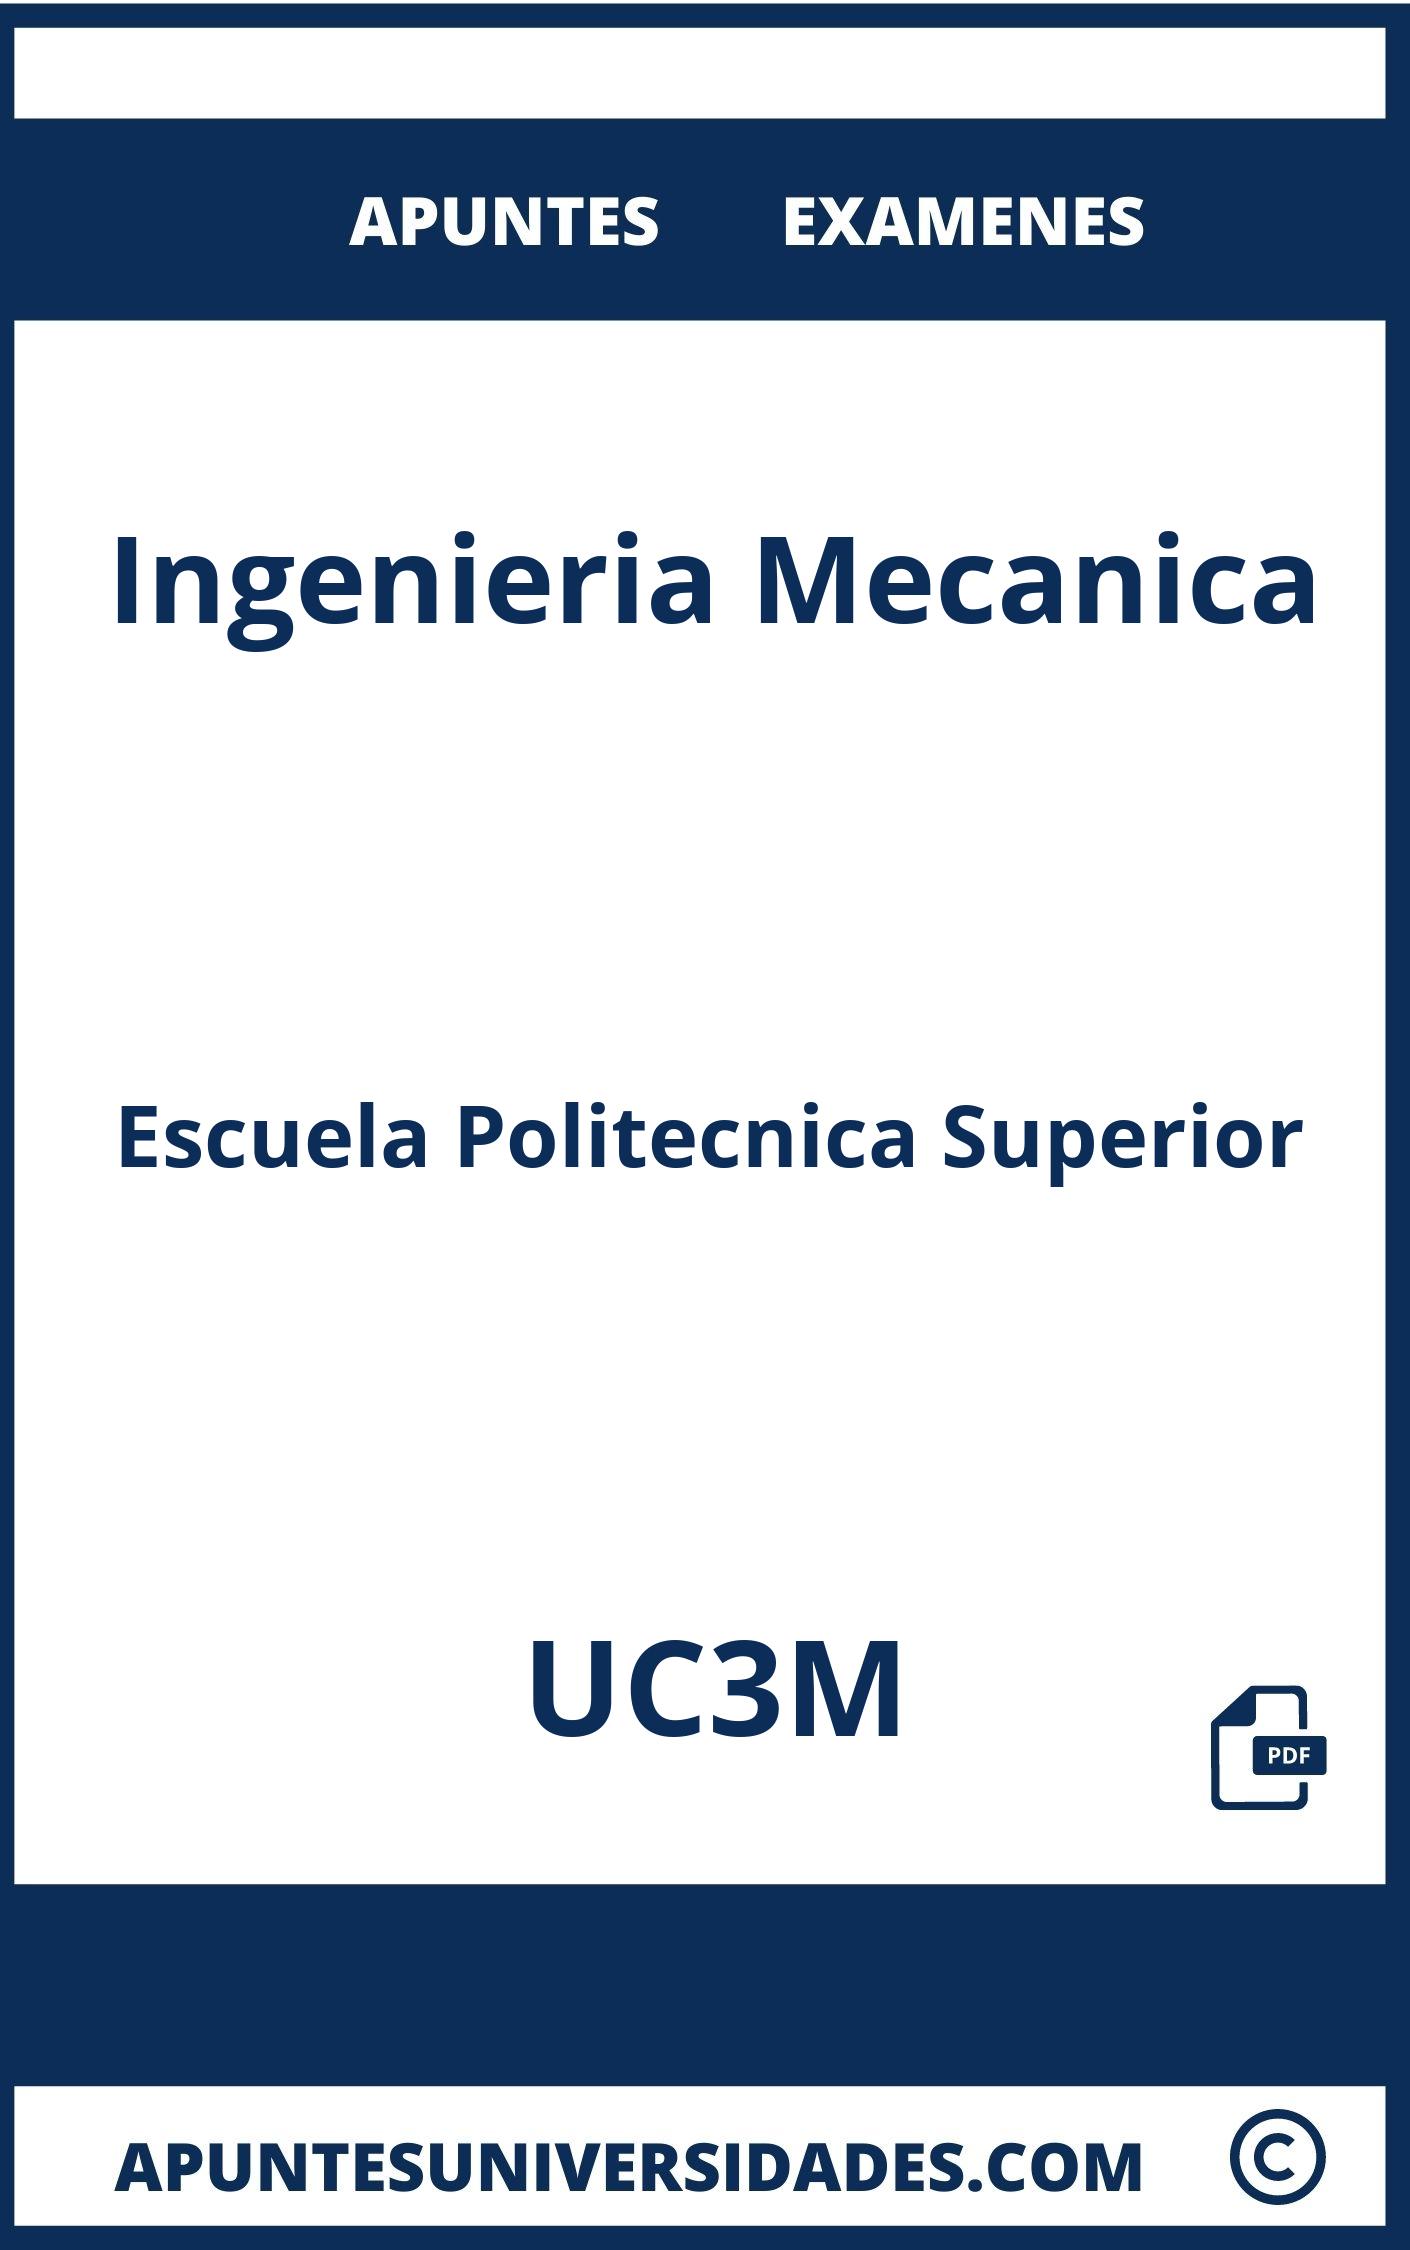 Apuntes y Examenes de Ingenieria Mecanica UC3M